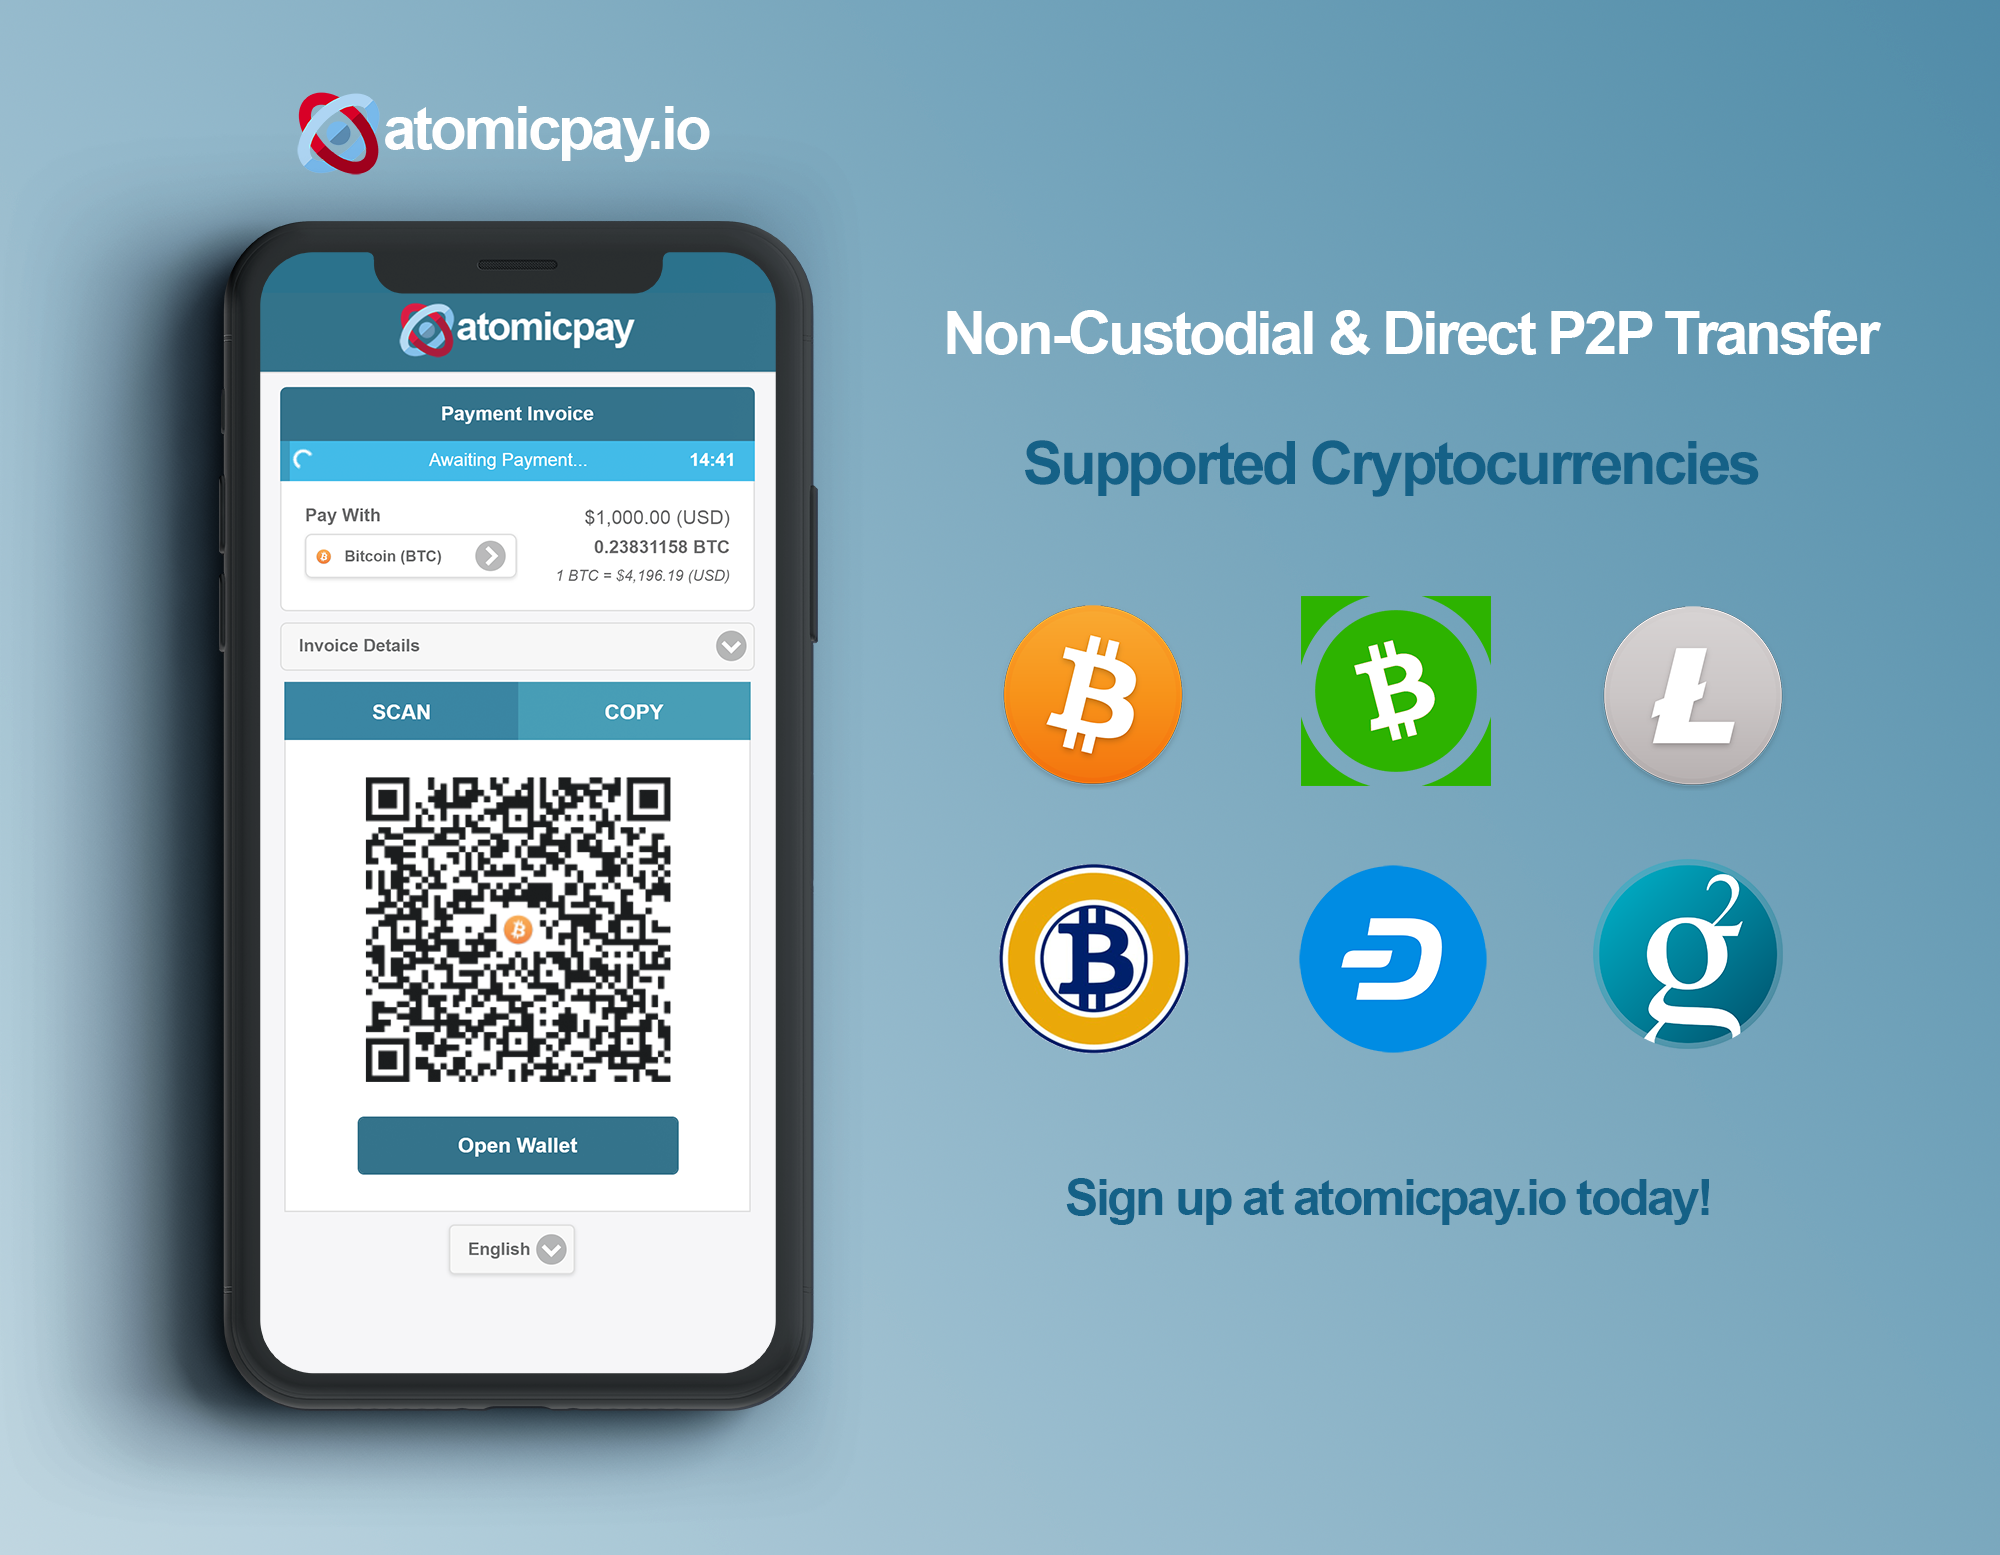 AtomicPay Supported Cryptocurrencies: Bitcoin, Litecoin, Bitcoin Cash, Dash, Bitcoin Gold, Groestlcoin and more